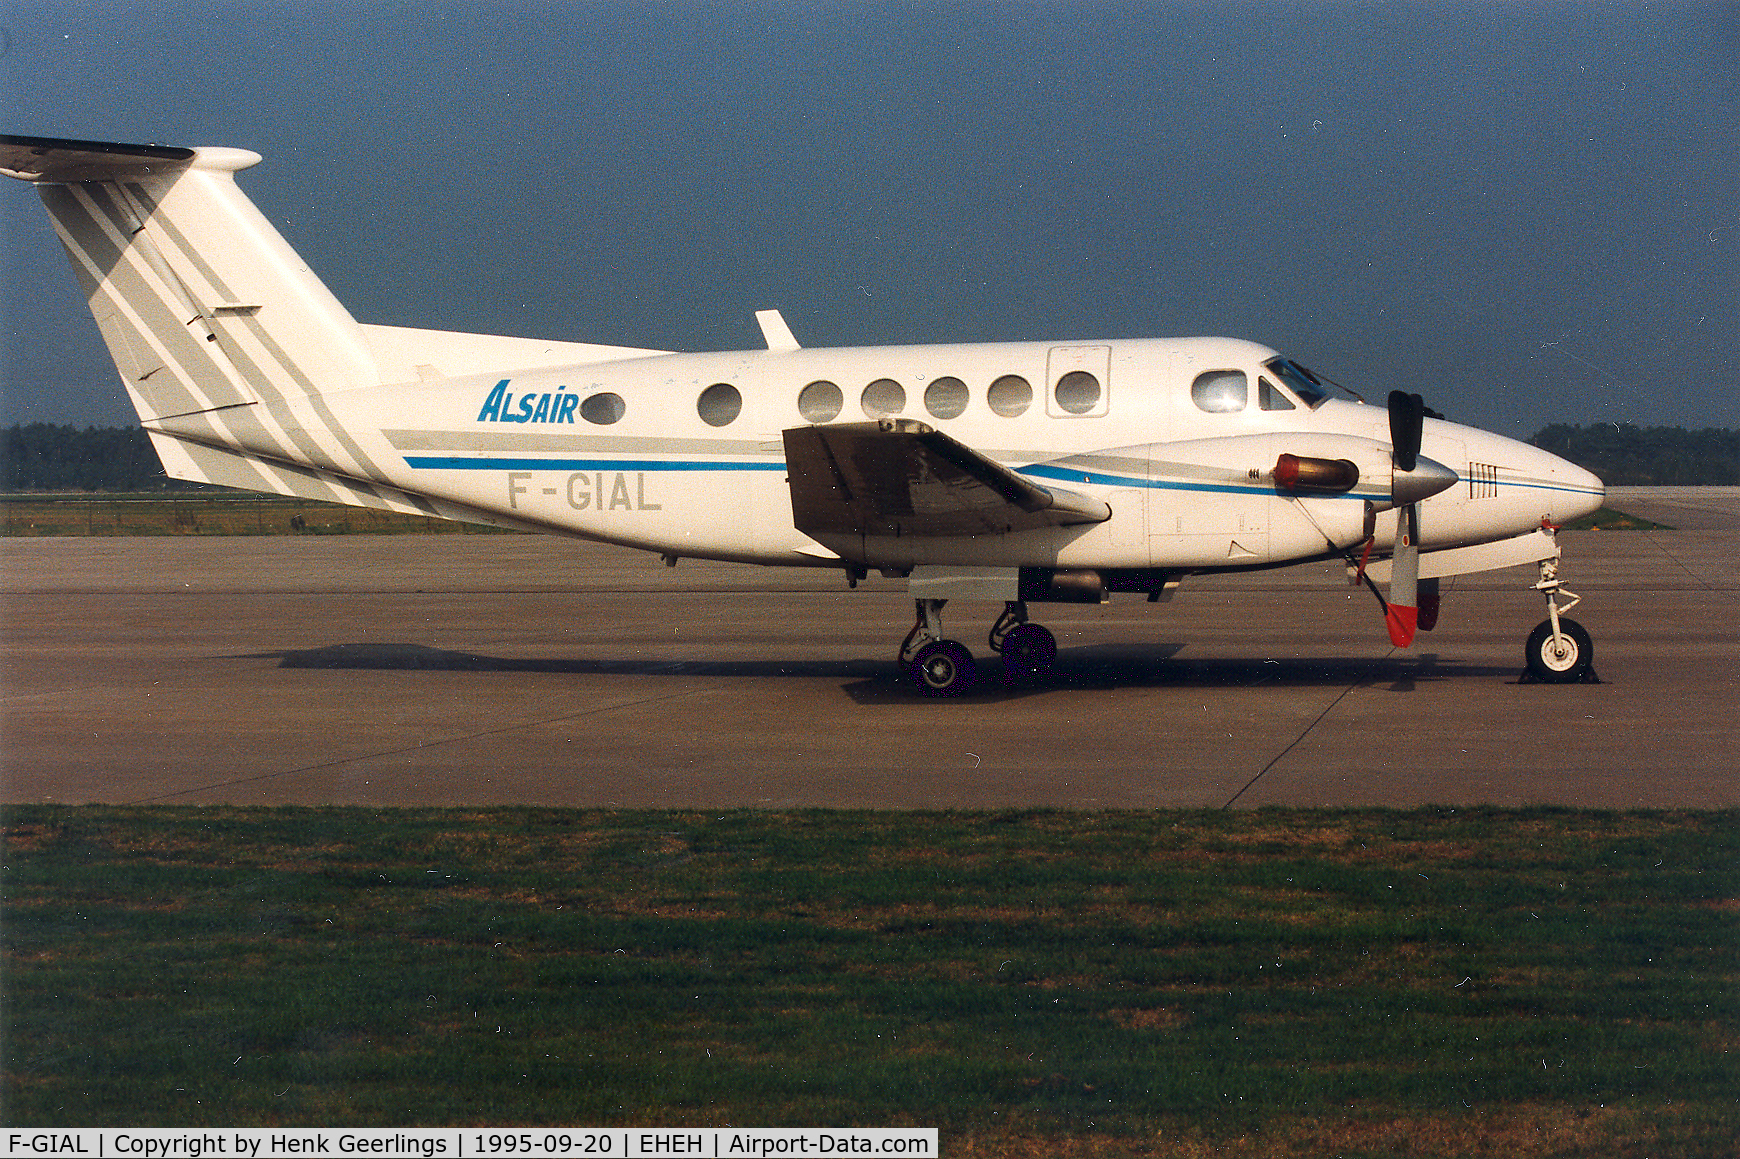 F-GIAL, Beech 200 C/N BB-844, Alsair